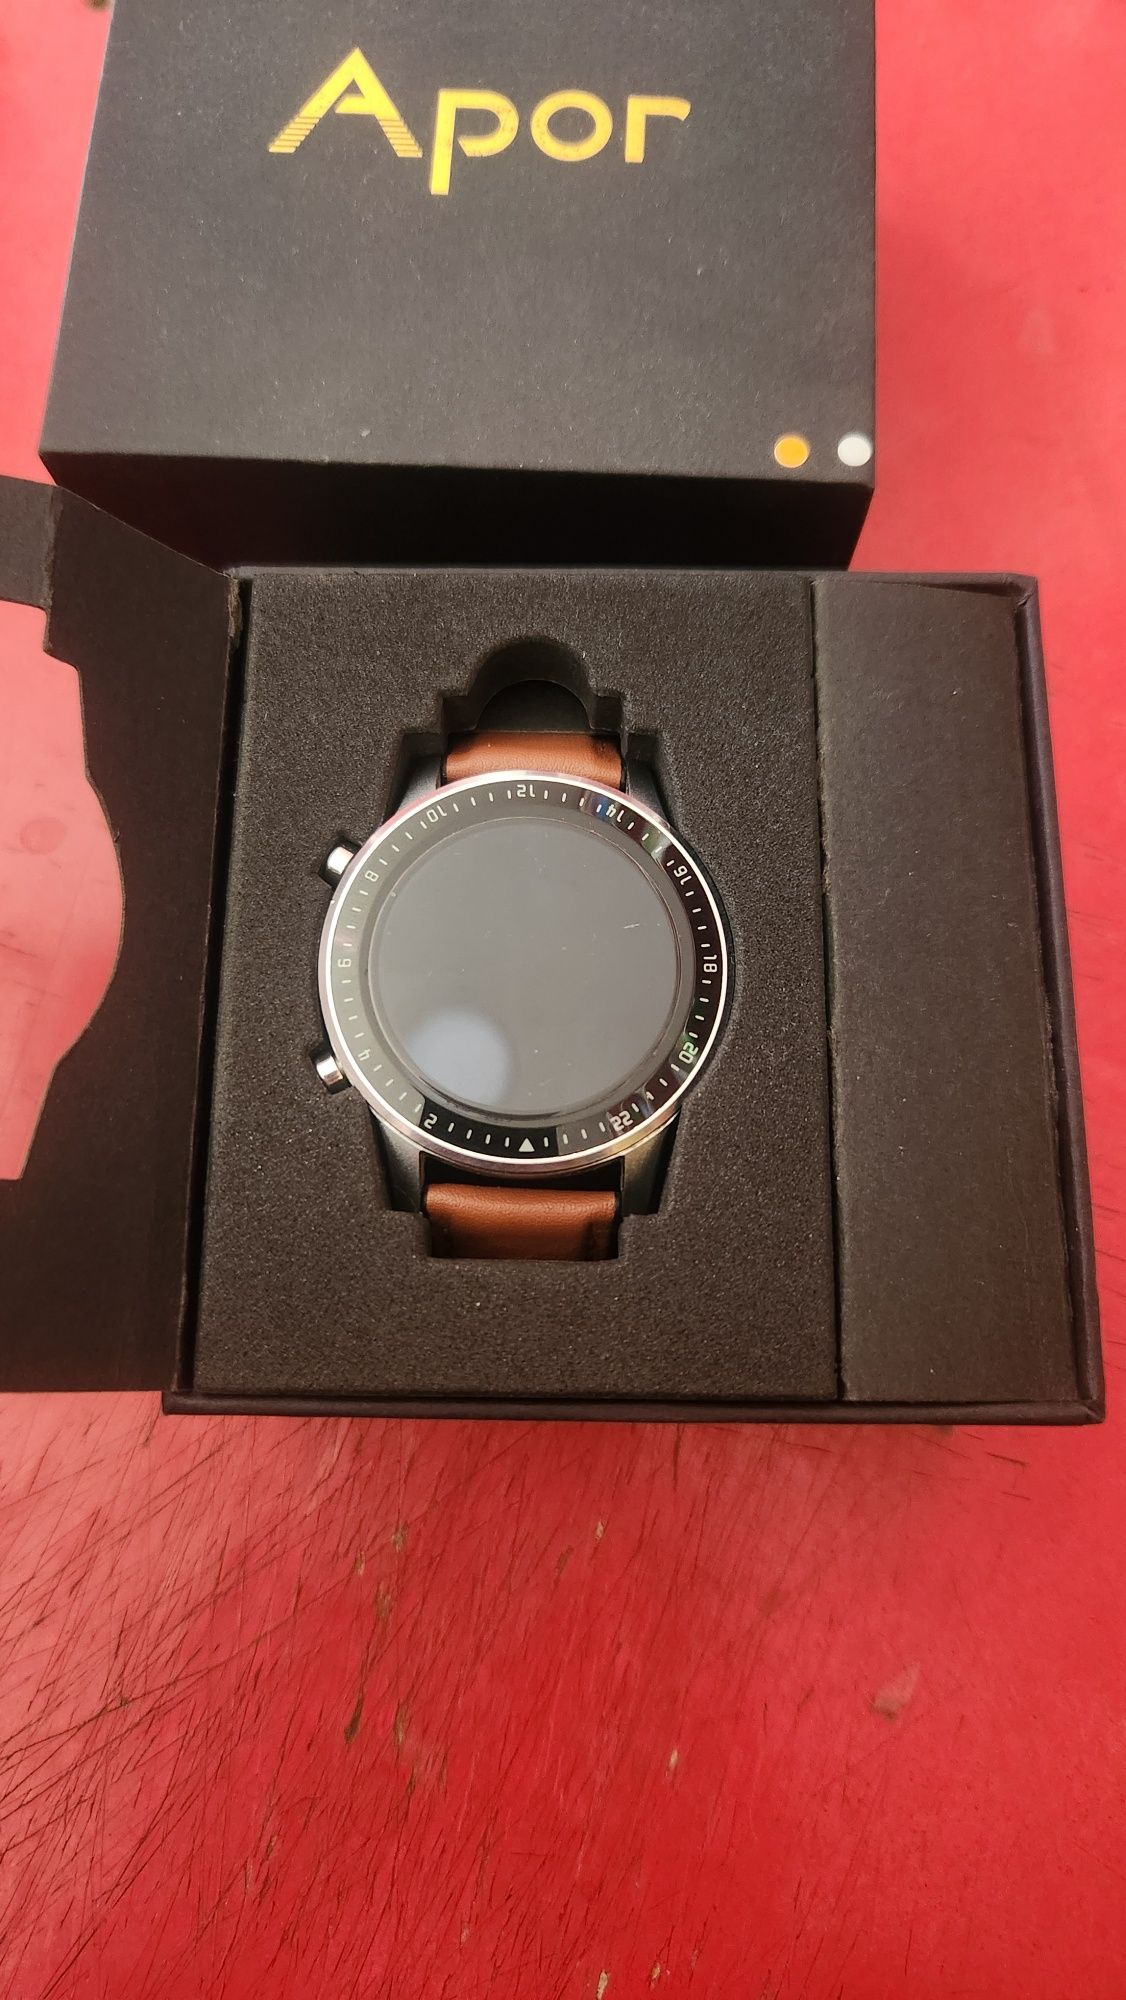 Apor smart watch